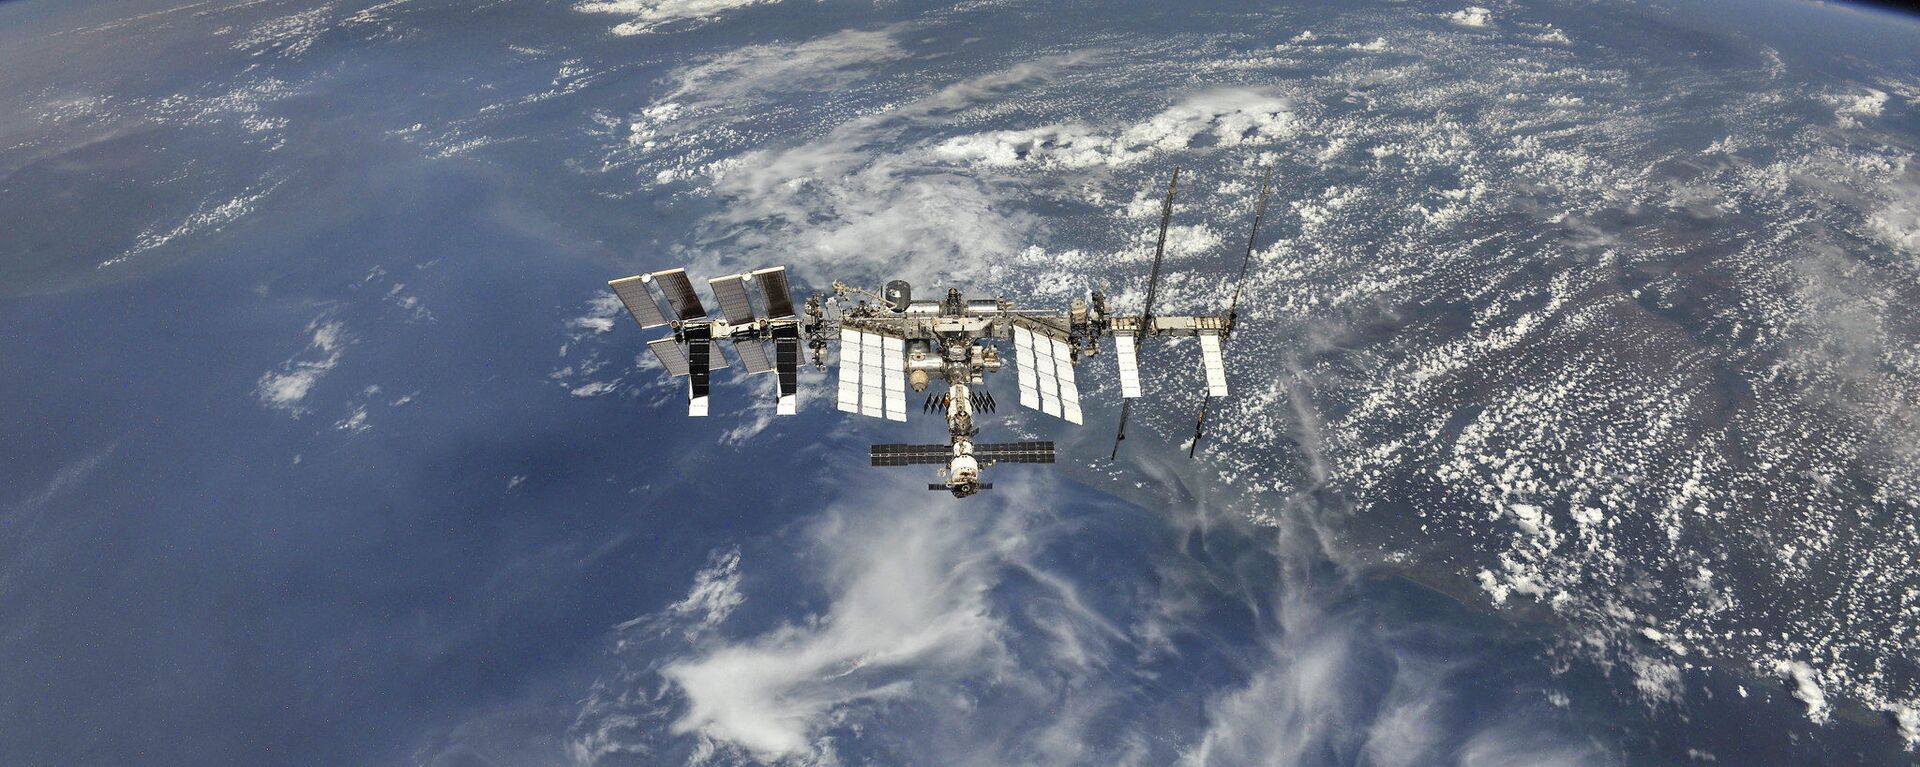 Estación Espacial Internacional (EEI) - Sputnik Mundo, 1920, 23.04.2021